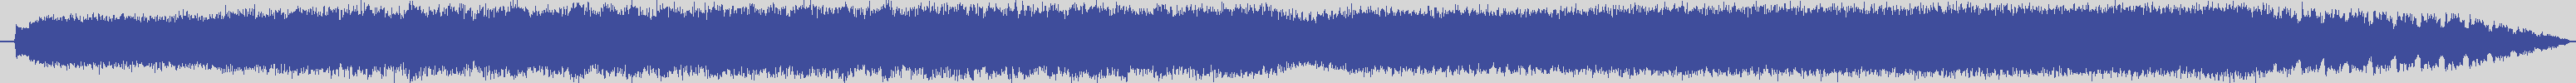 upr [UPR010] Marc Hurtado, Alan Vega - Ghost Rider [Original Mix] audio wave form